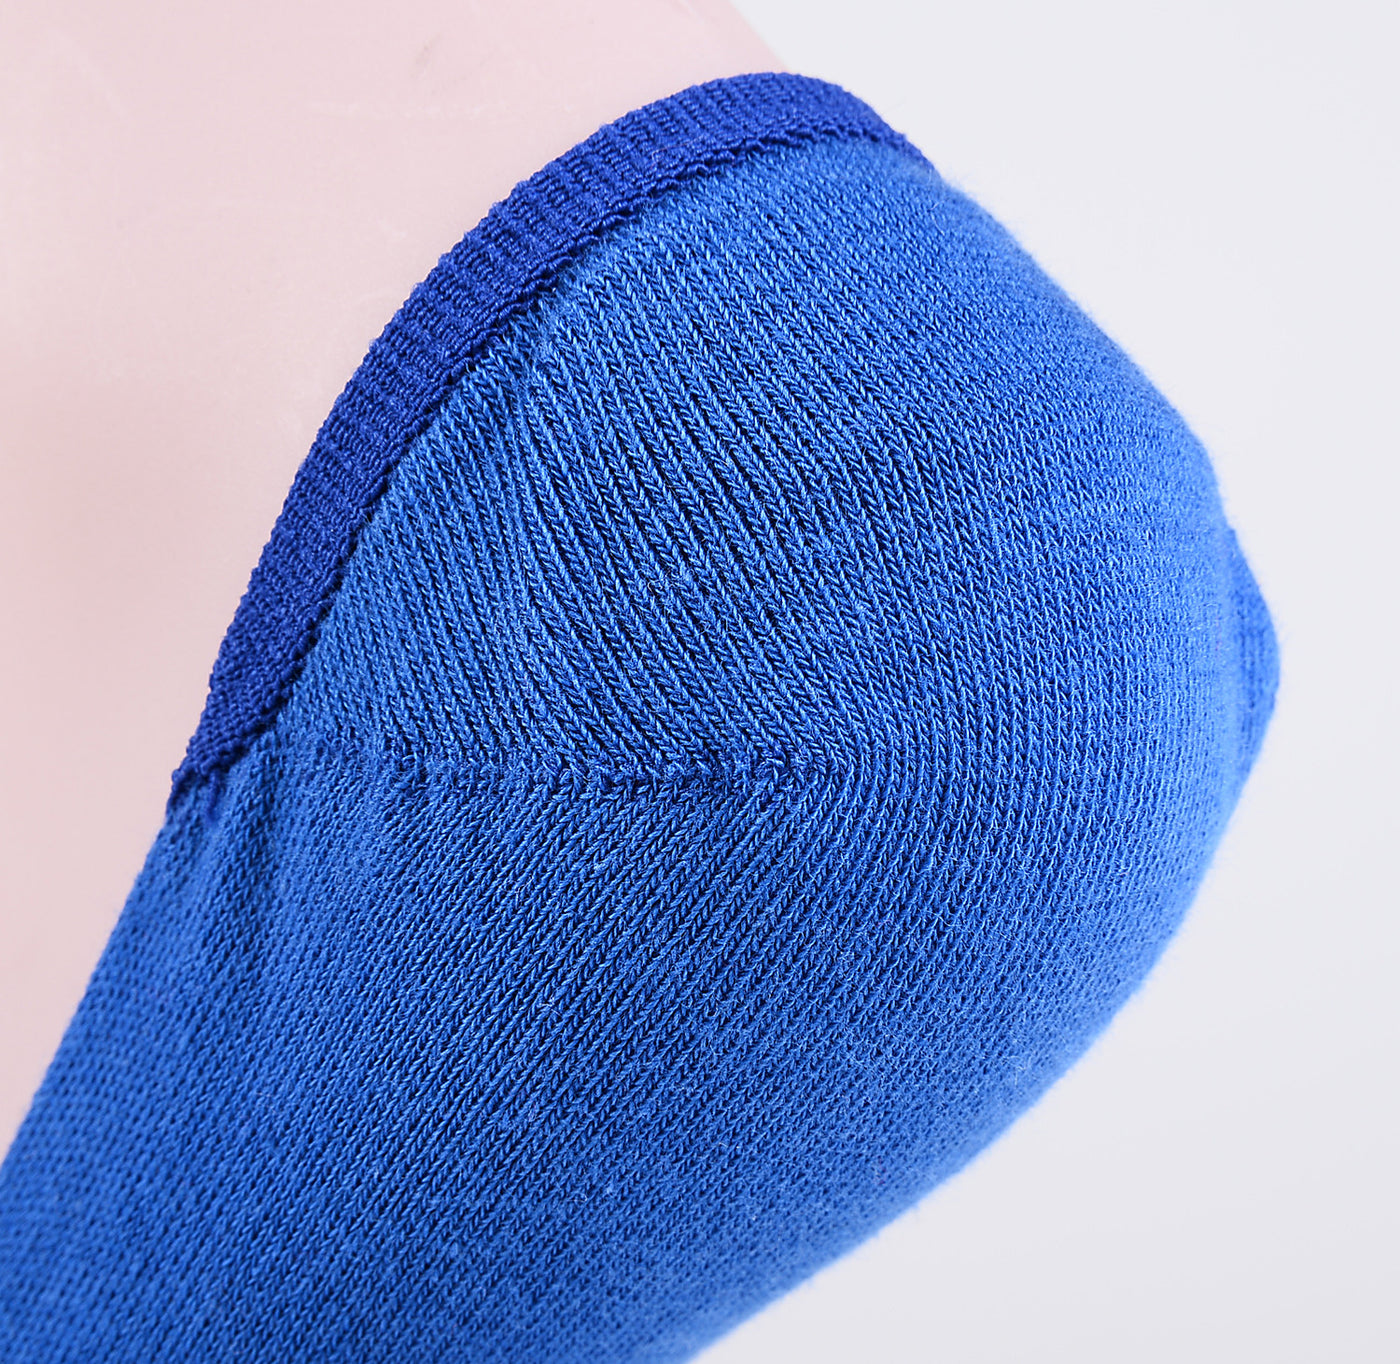 2 pares de calcetines invisibles de algodón peinado fino a rayas azul